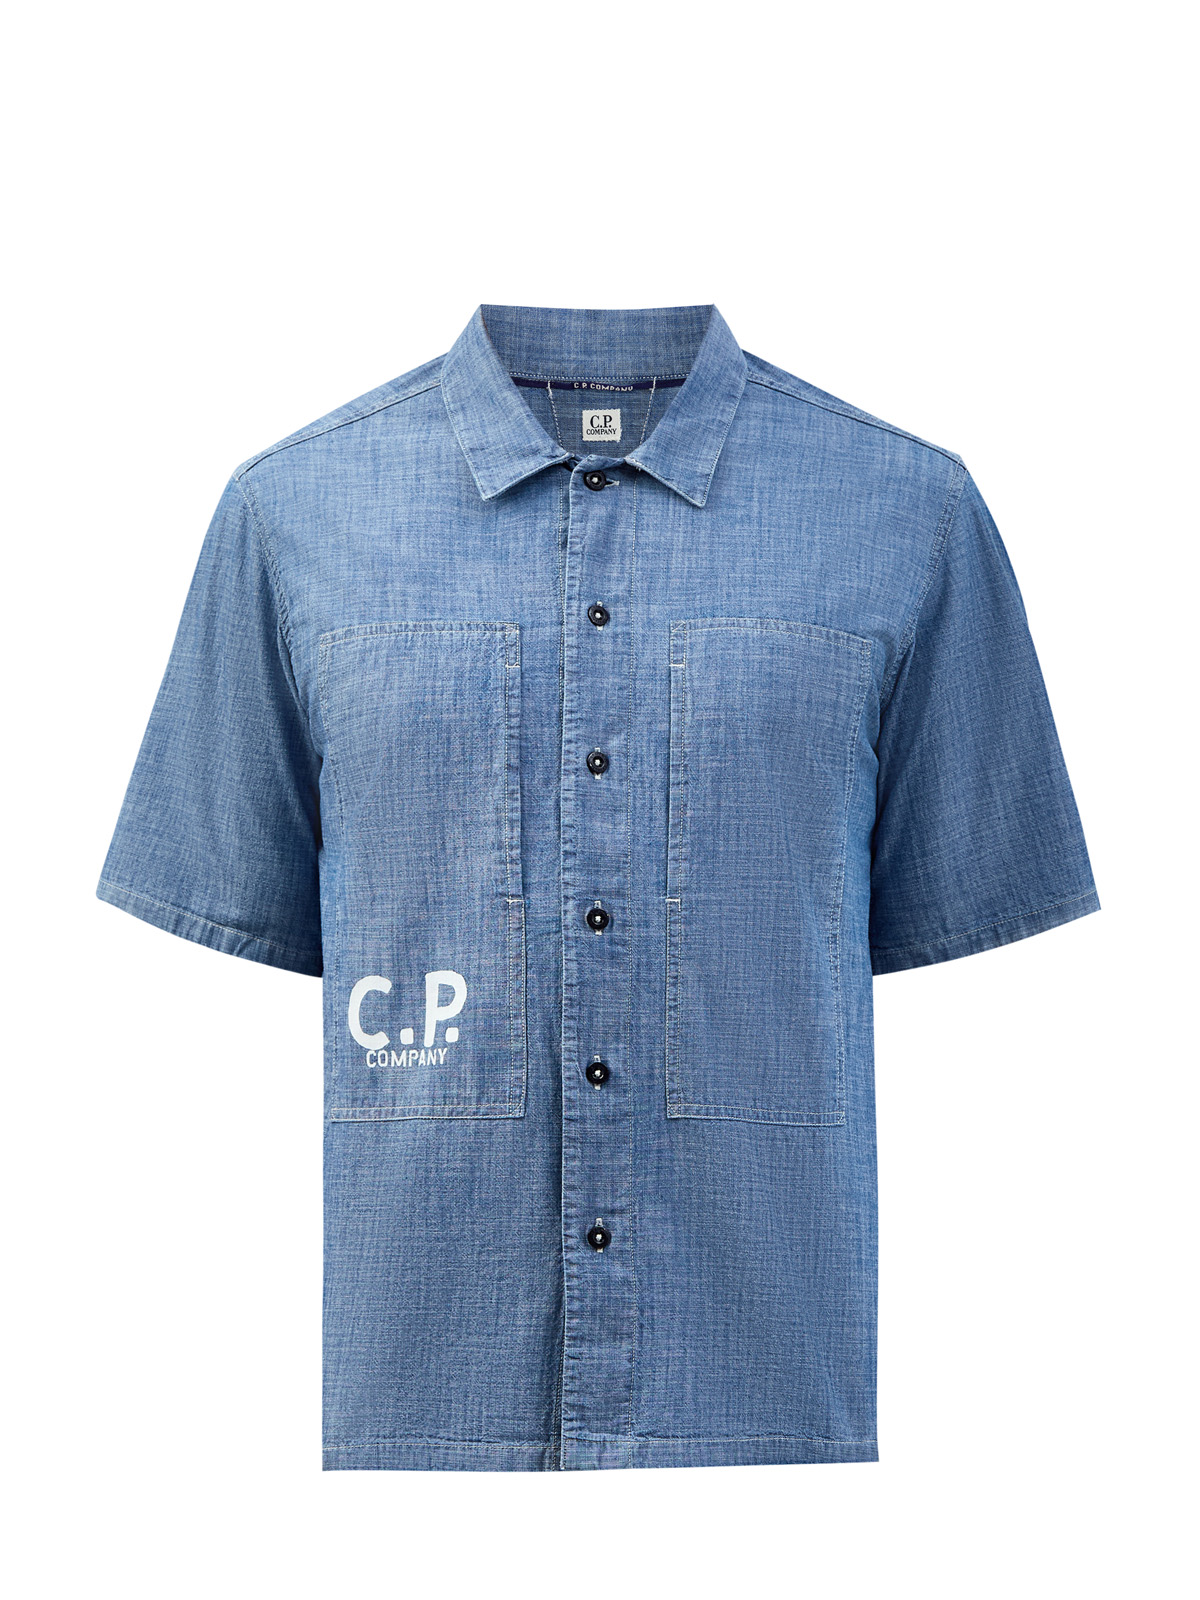 Рубашка из тонкого хлопкового денима Chambray с принтом C.P.COMPANY голубого цвета